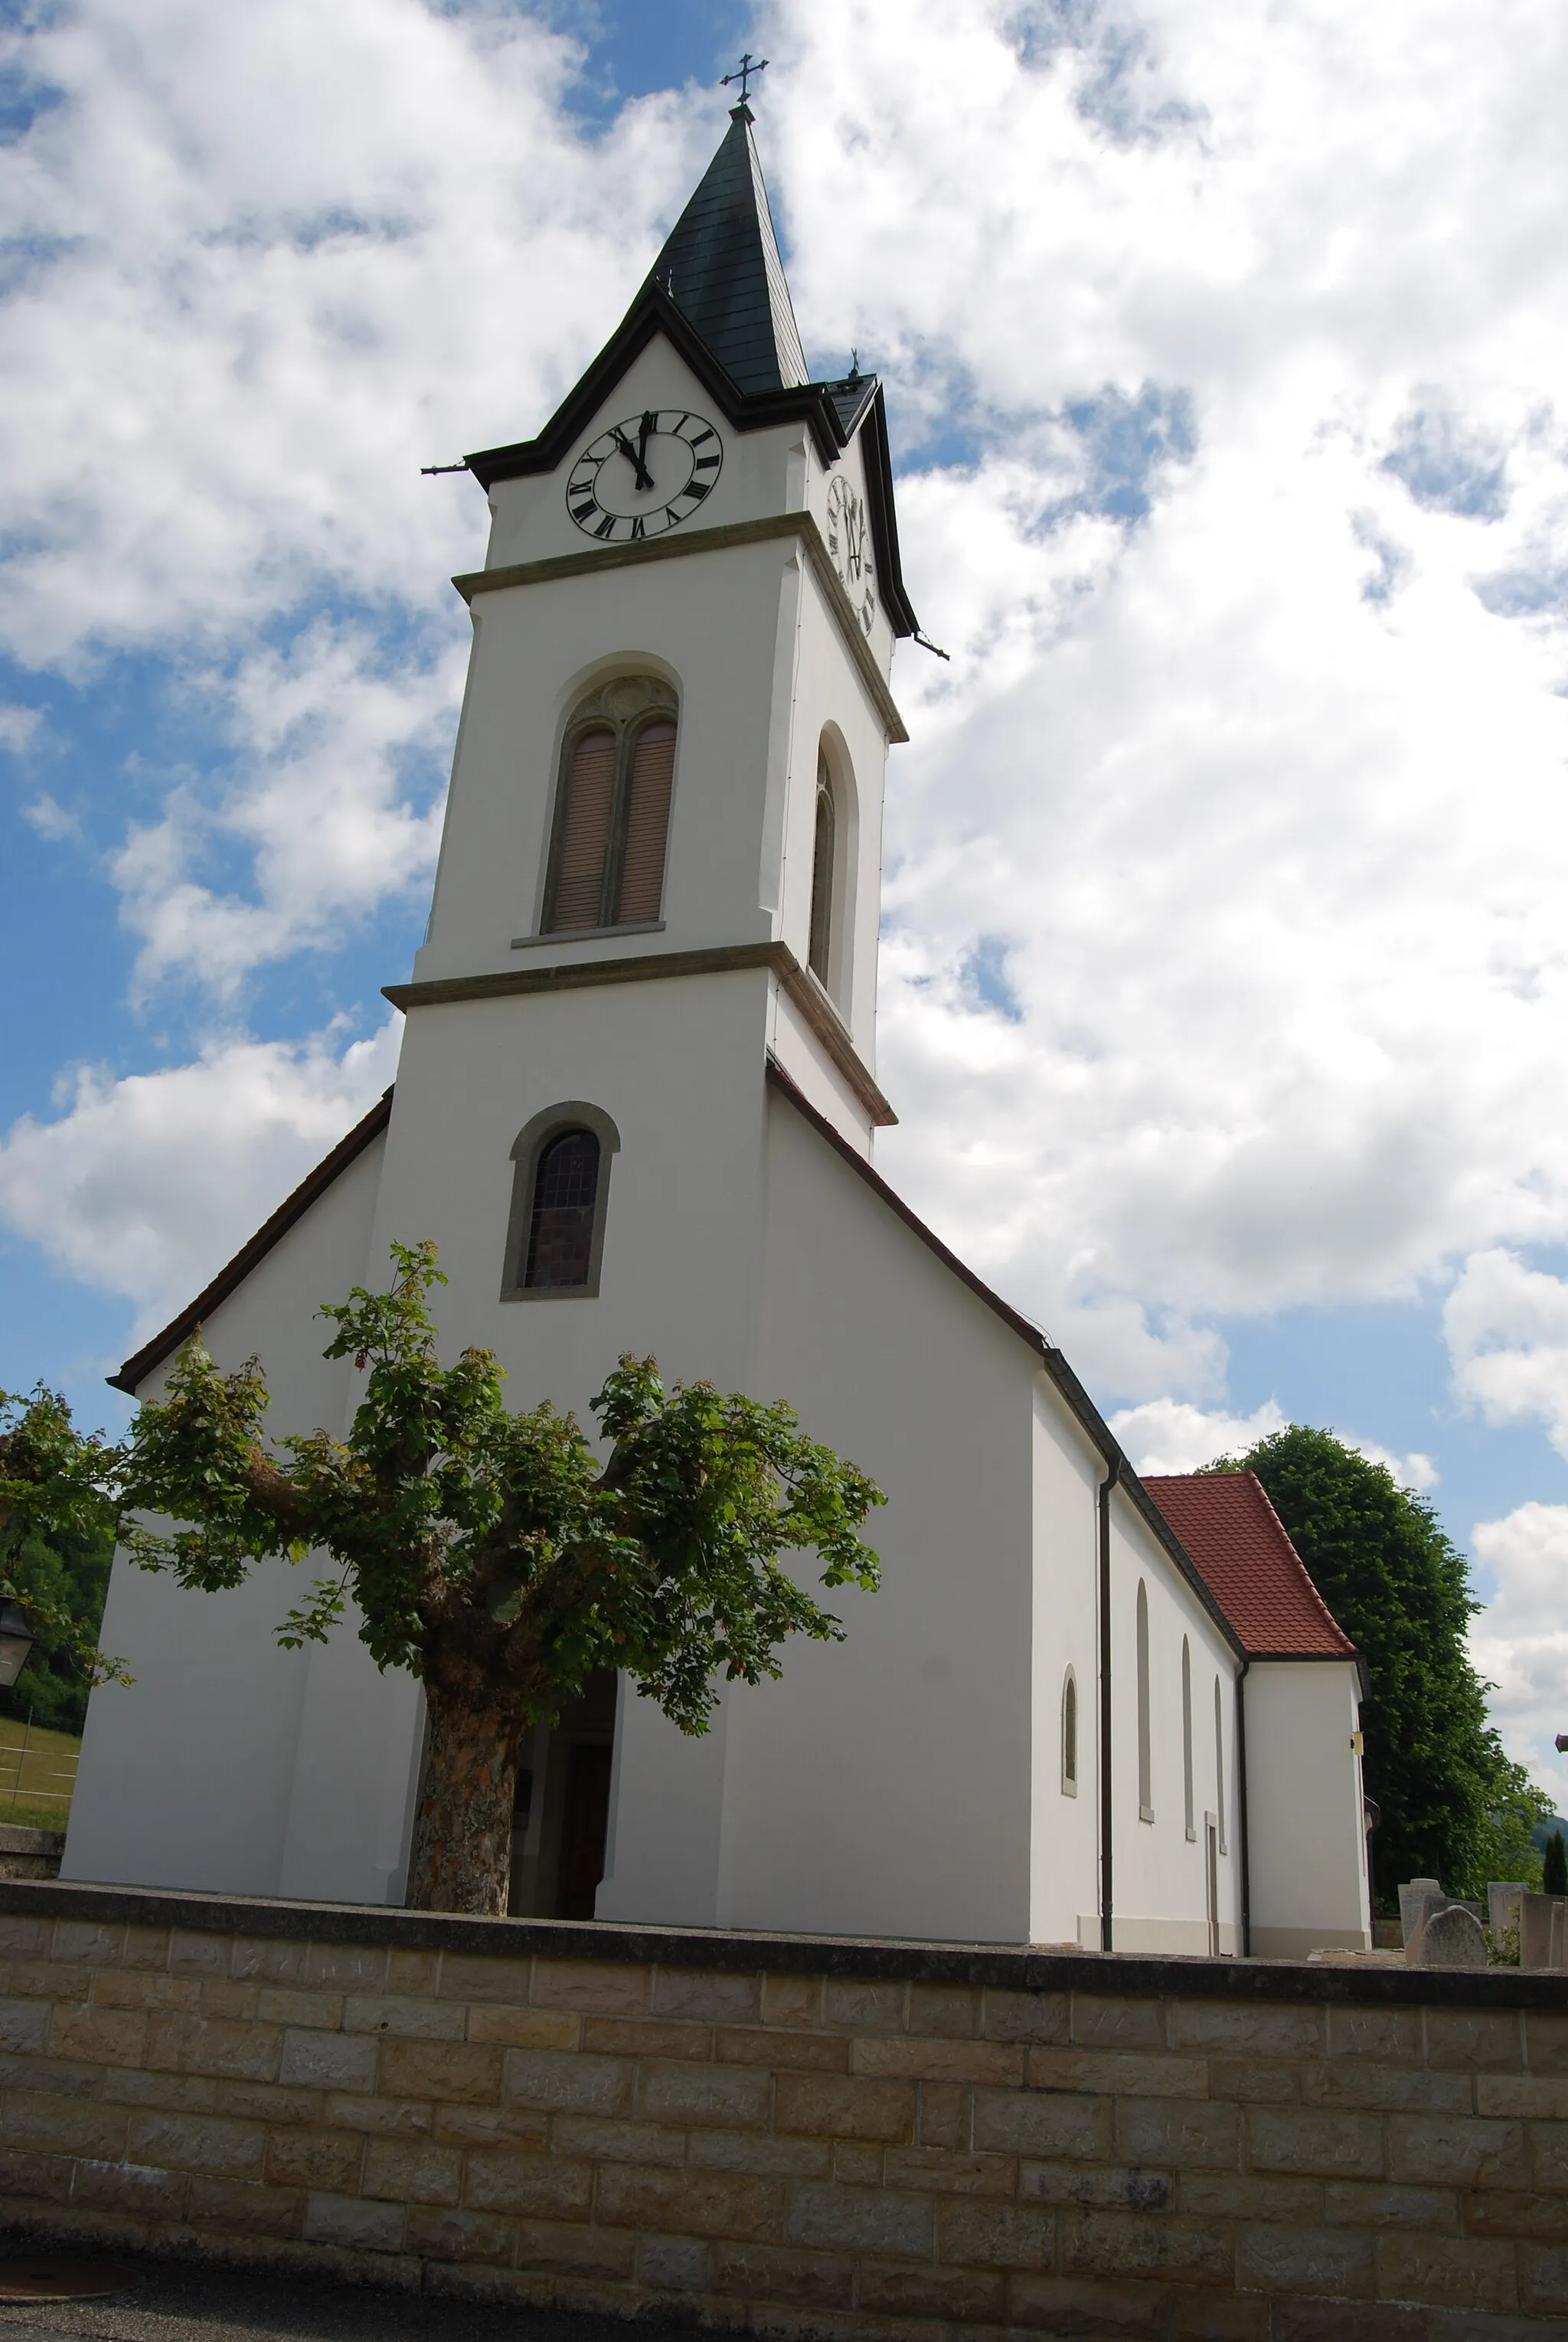 Photo showing: Church of Ifenthal, municipality Hauenstein-Ifenthal, canton of Solothurn, Switzerland